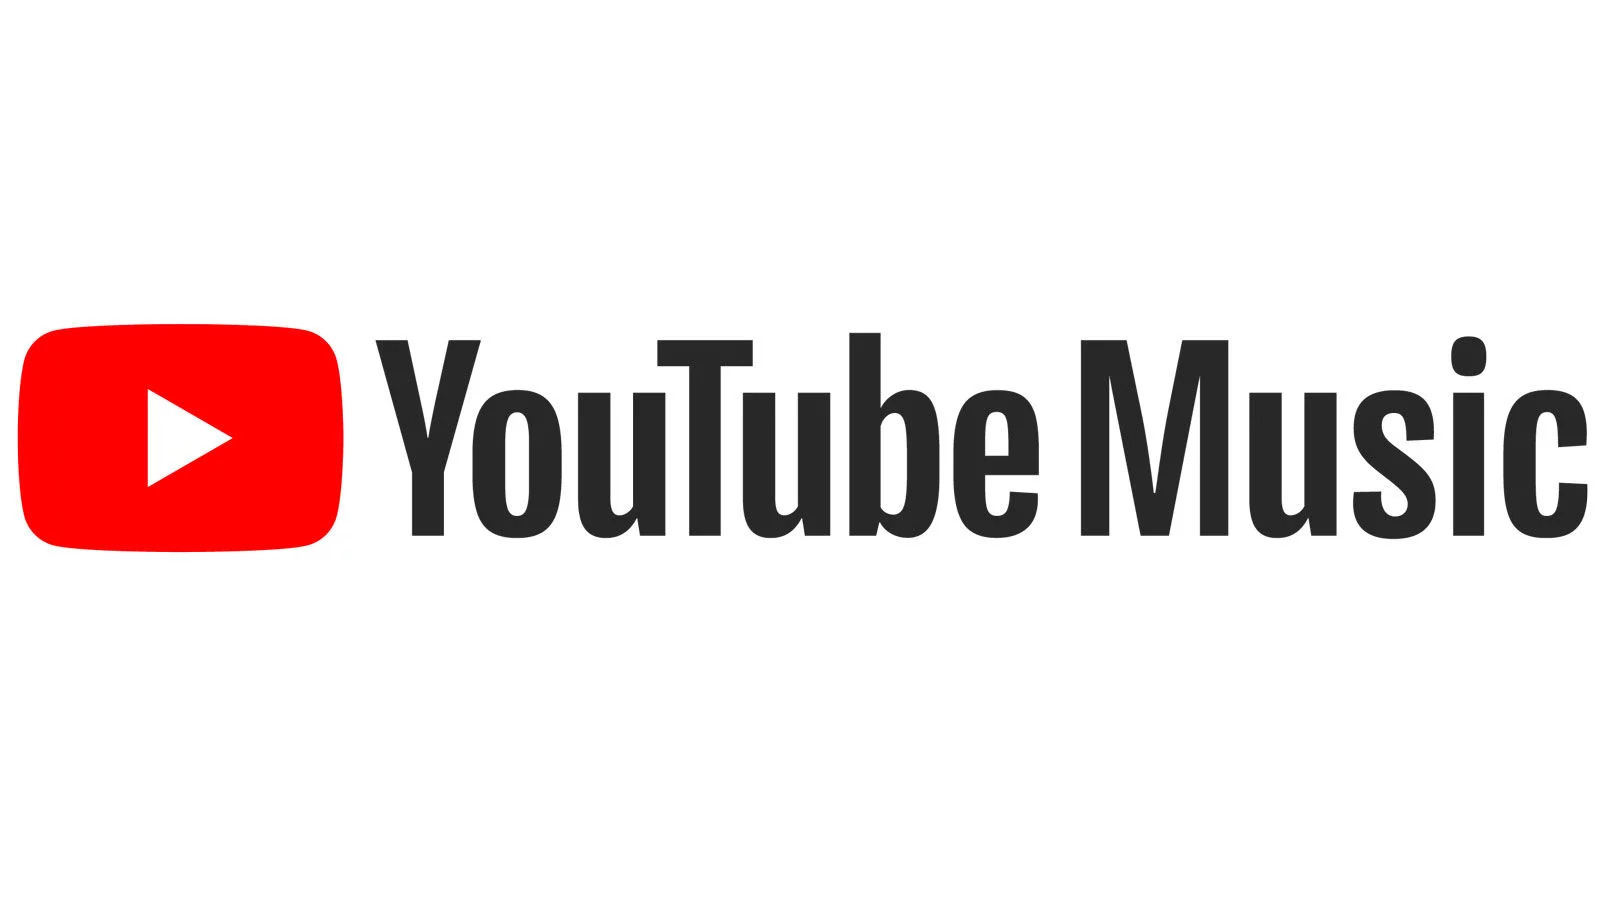 Ютуб мьюзик цена. Значок ютуб Мьюзик. Логотип youtube Music PNG. Картинка для музыки на ютуб. Ютуб музыка иконка.